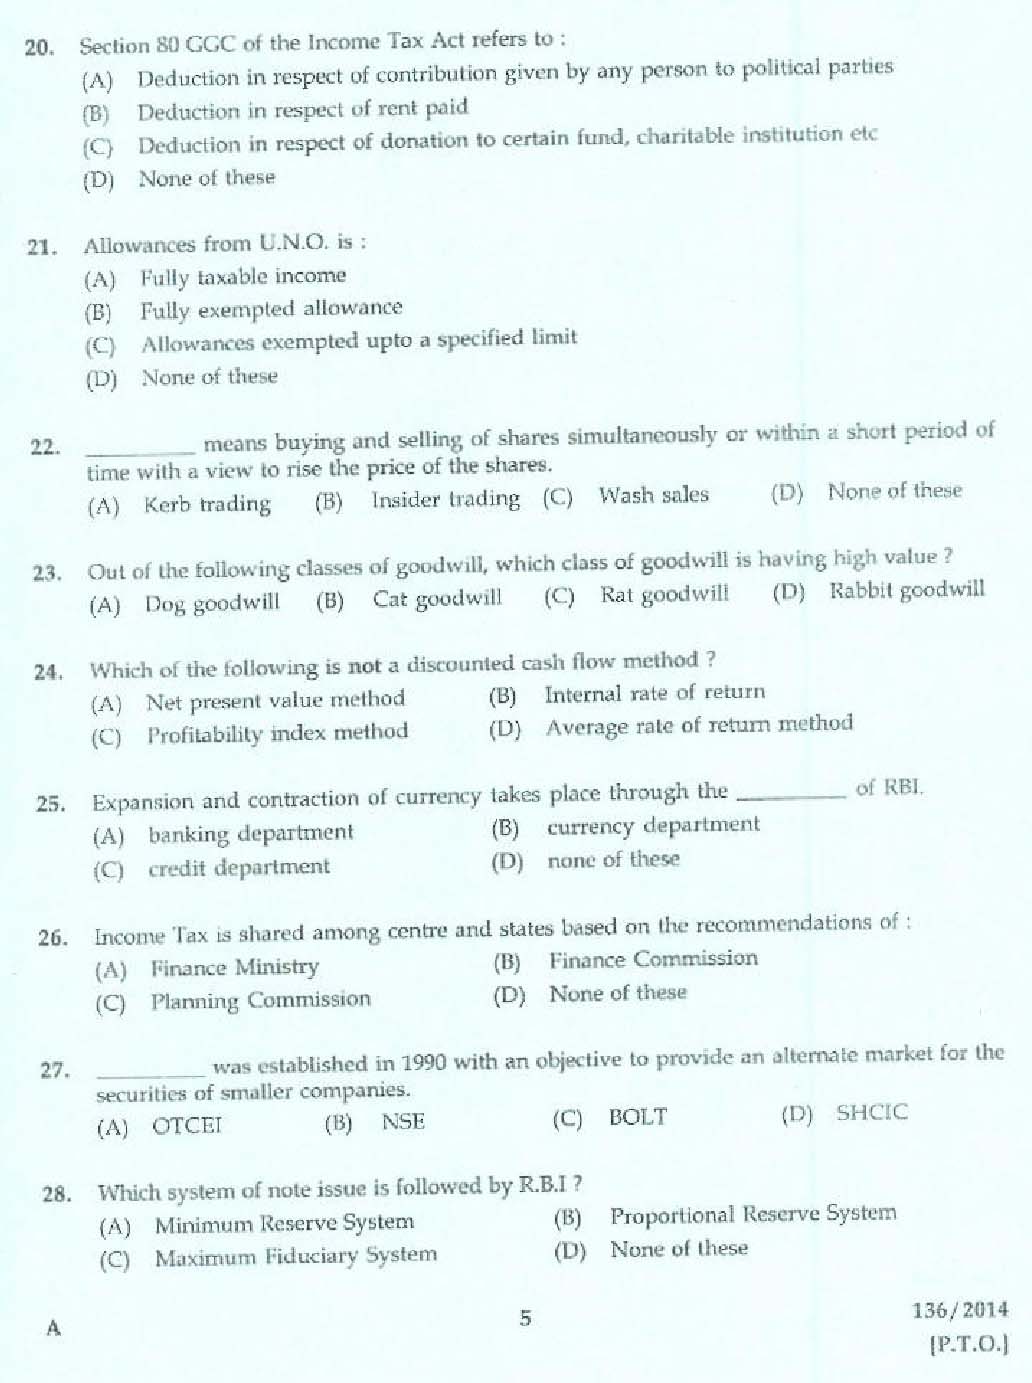 KPSC Superintendent Exam 2014 Code 1362014 3